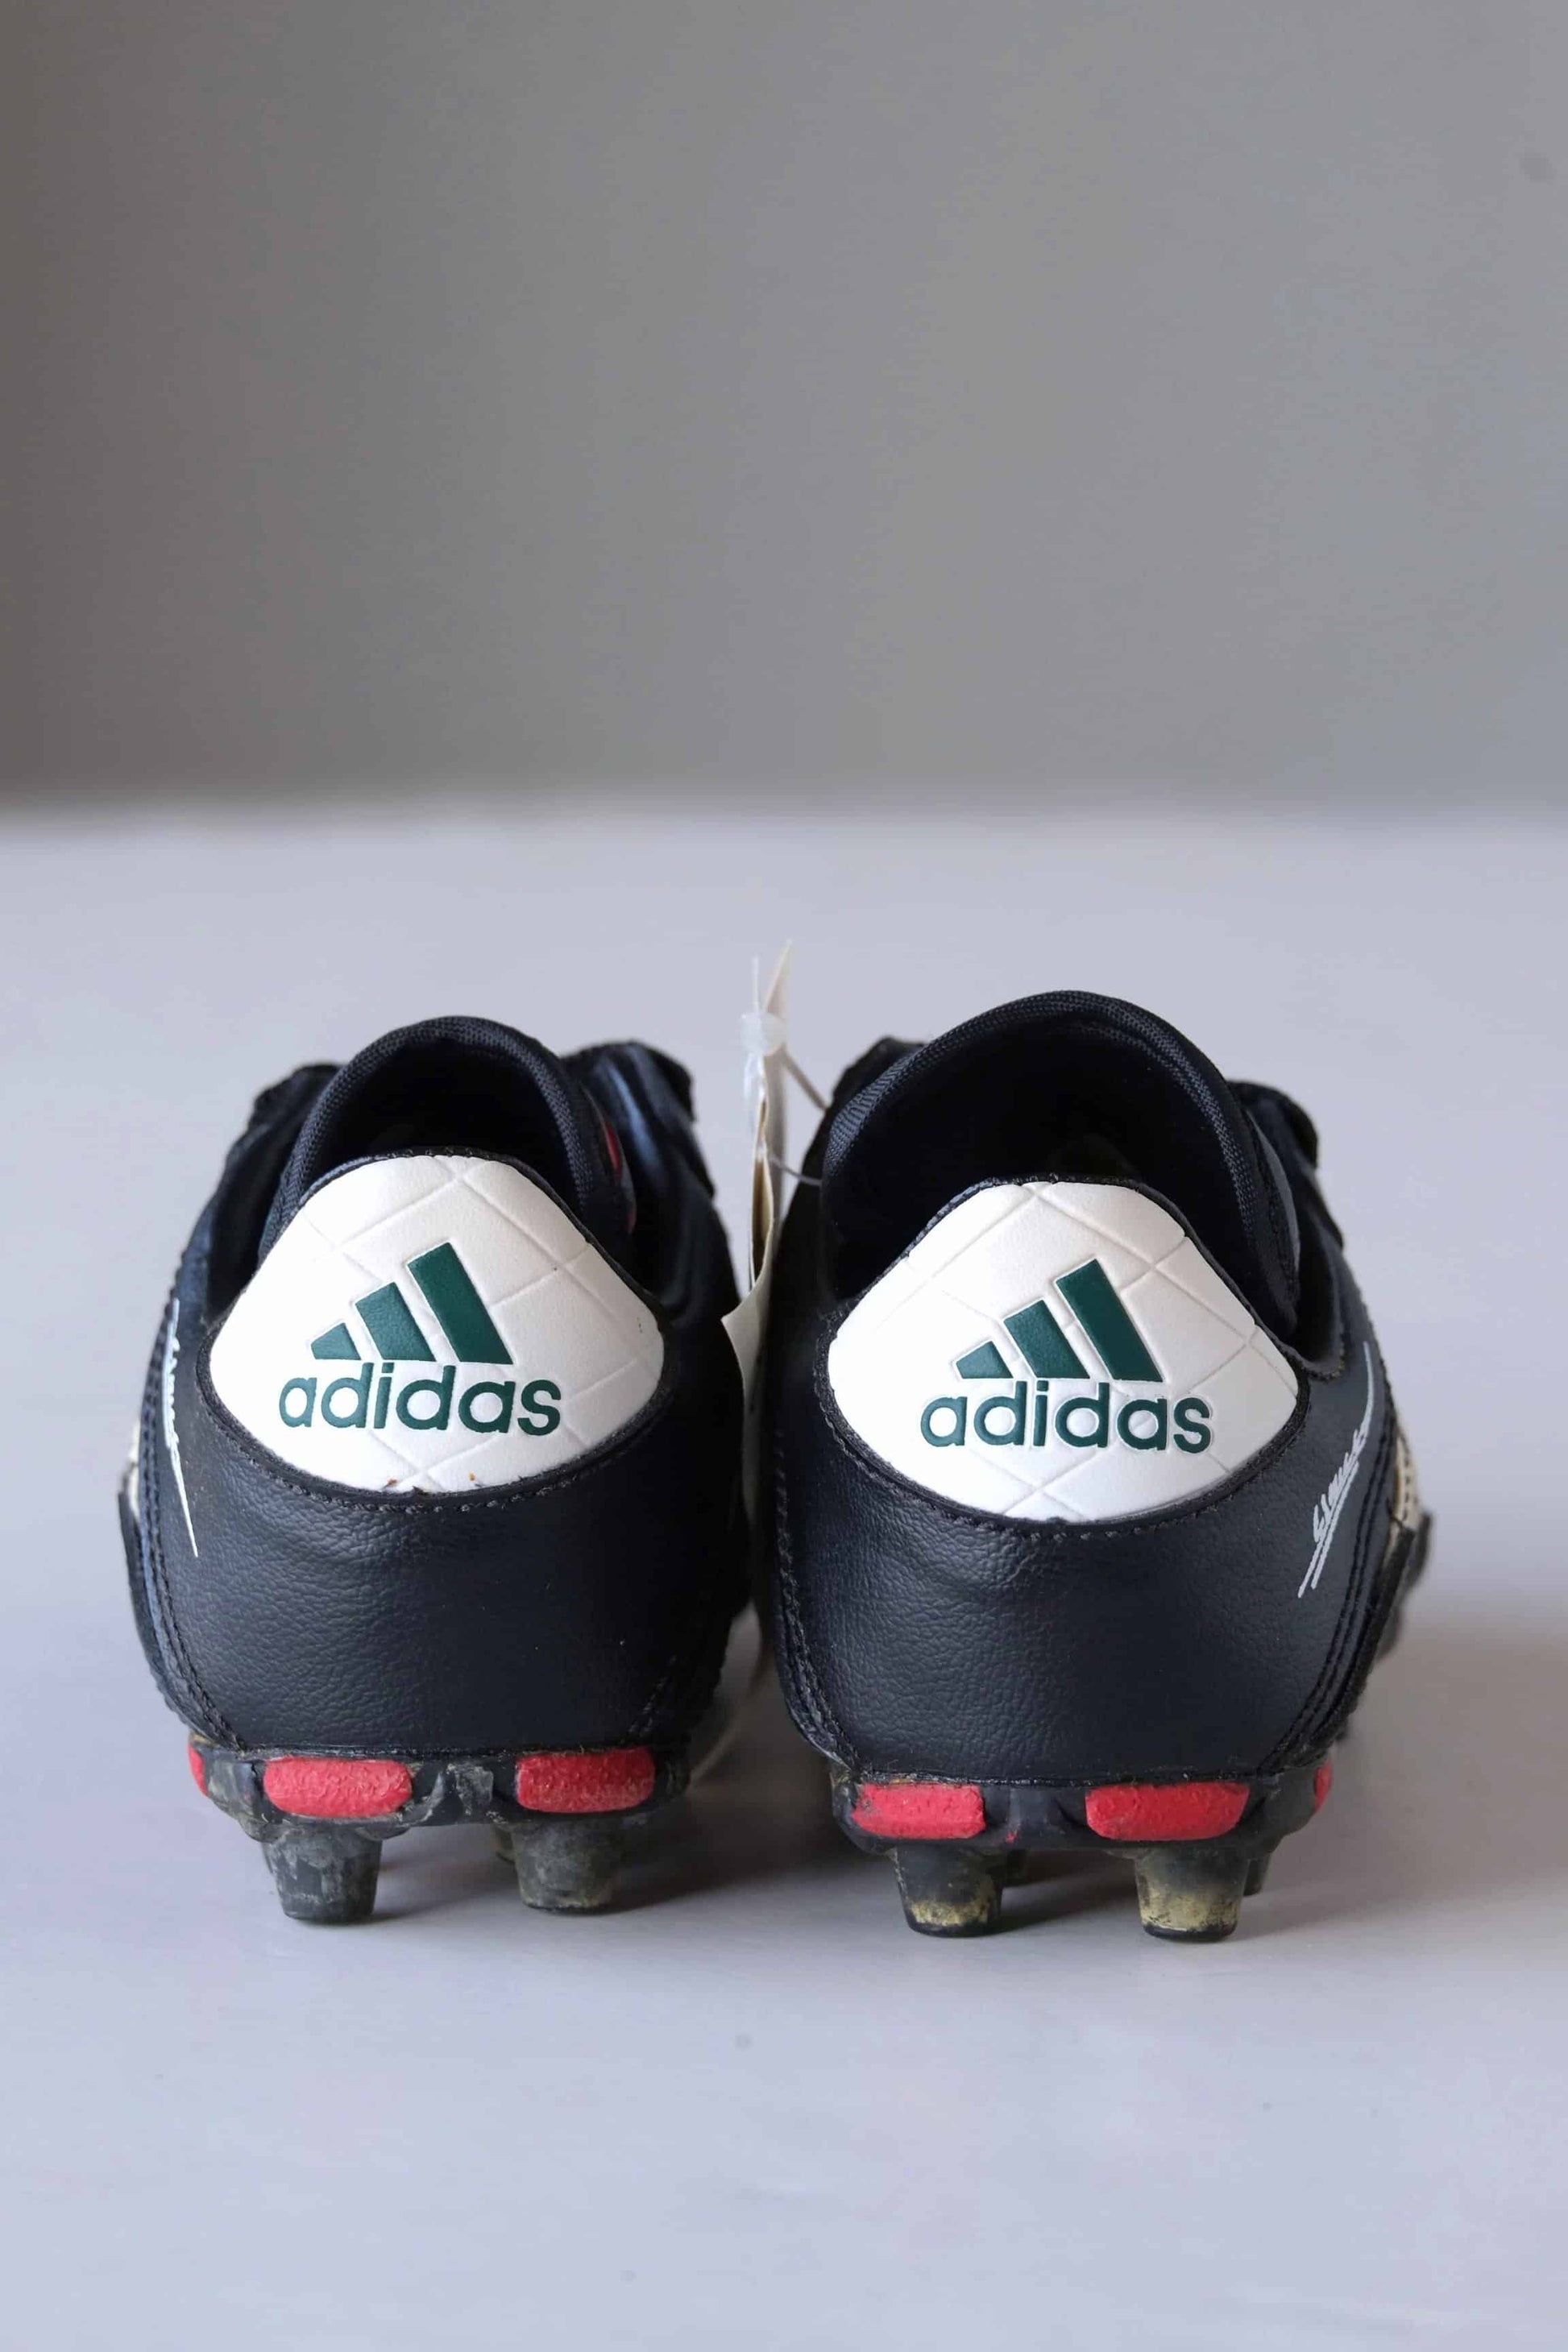 Spole tilbage Eve Sømil ADIDAS Desailly Liga Kids Football Boots – Vintage Something